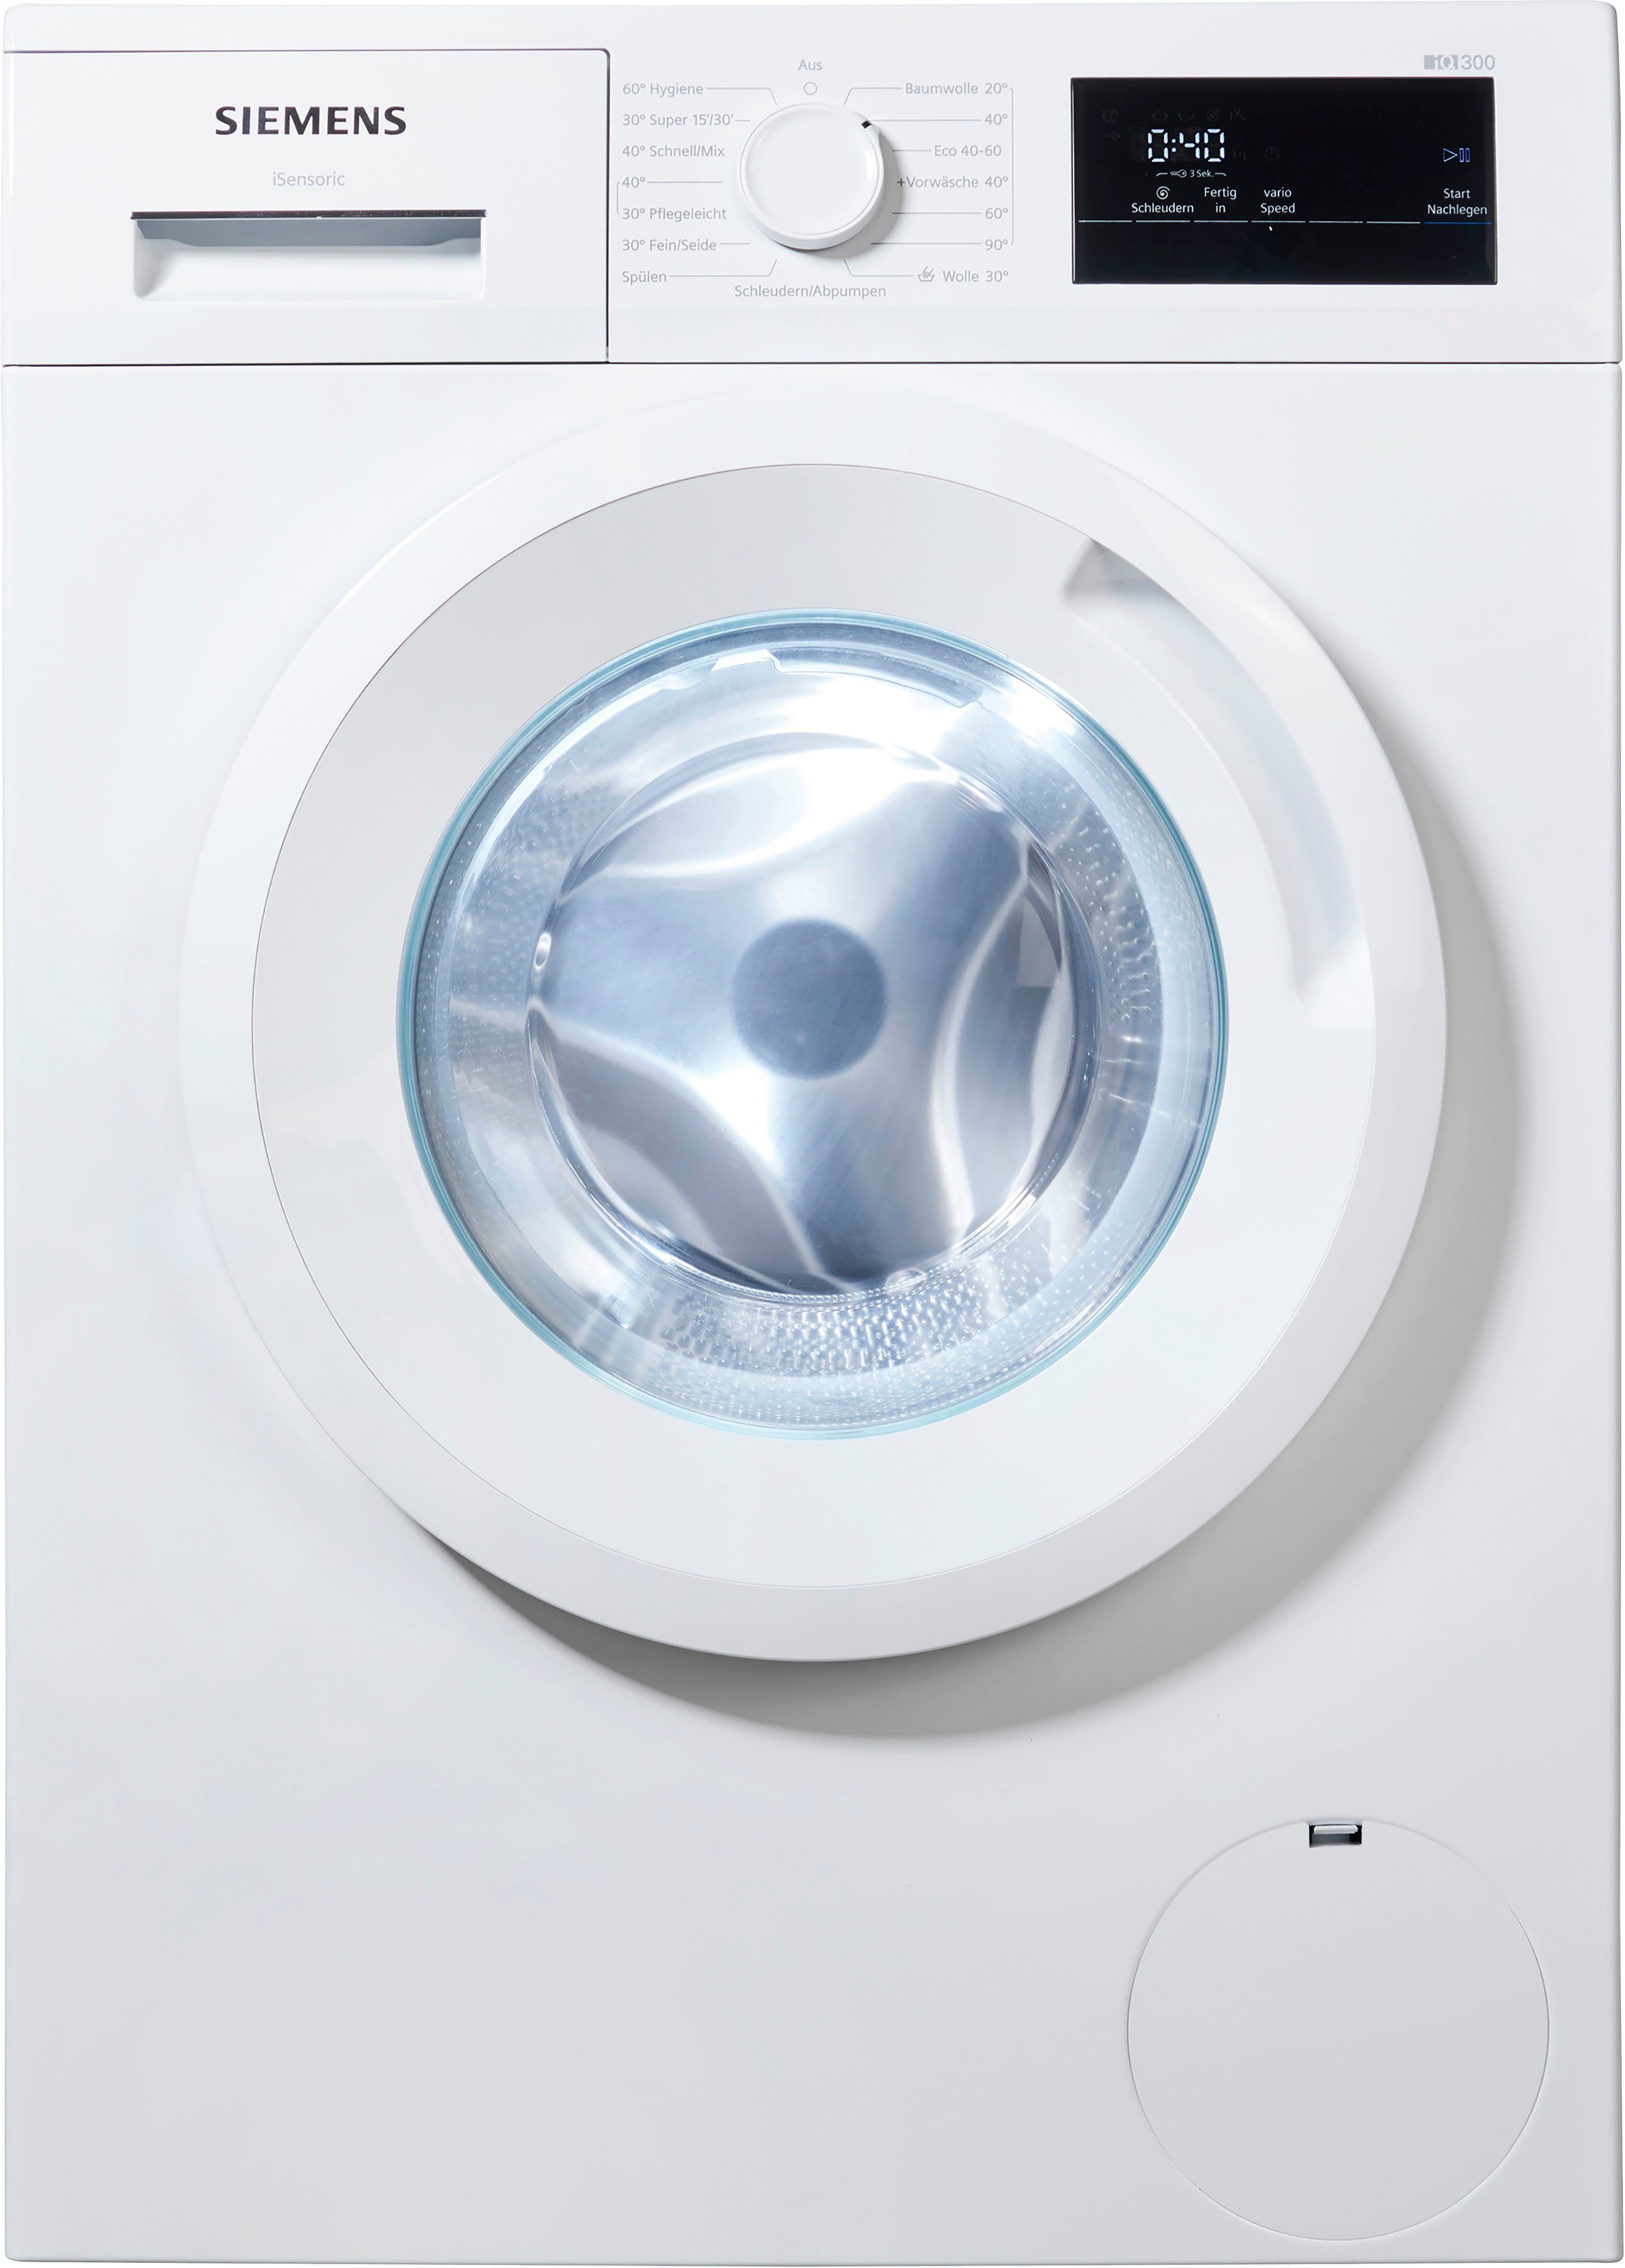 SIEMENS Waschmaschine iQ300 WM14N0A3, U/min 1400 kg, 7